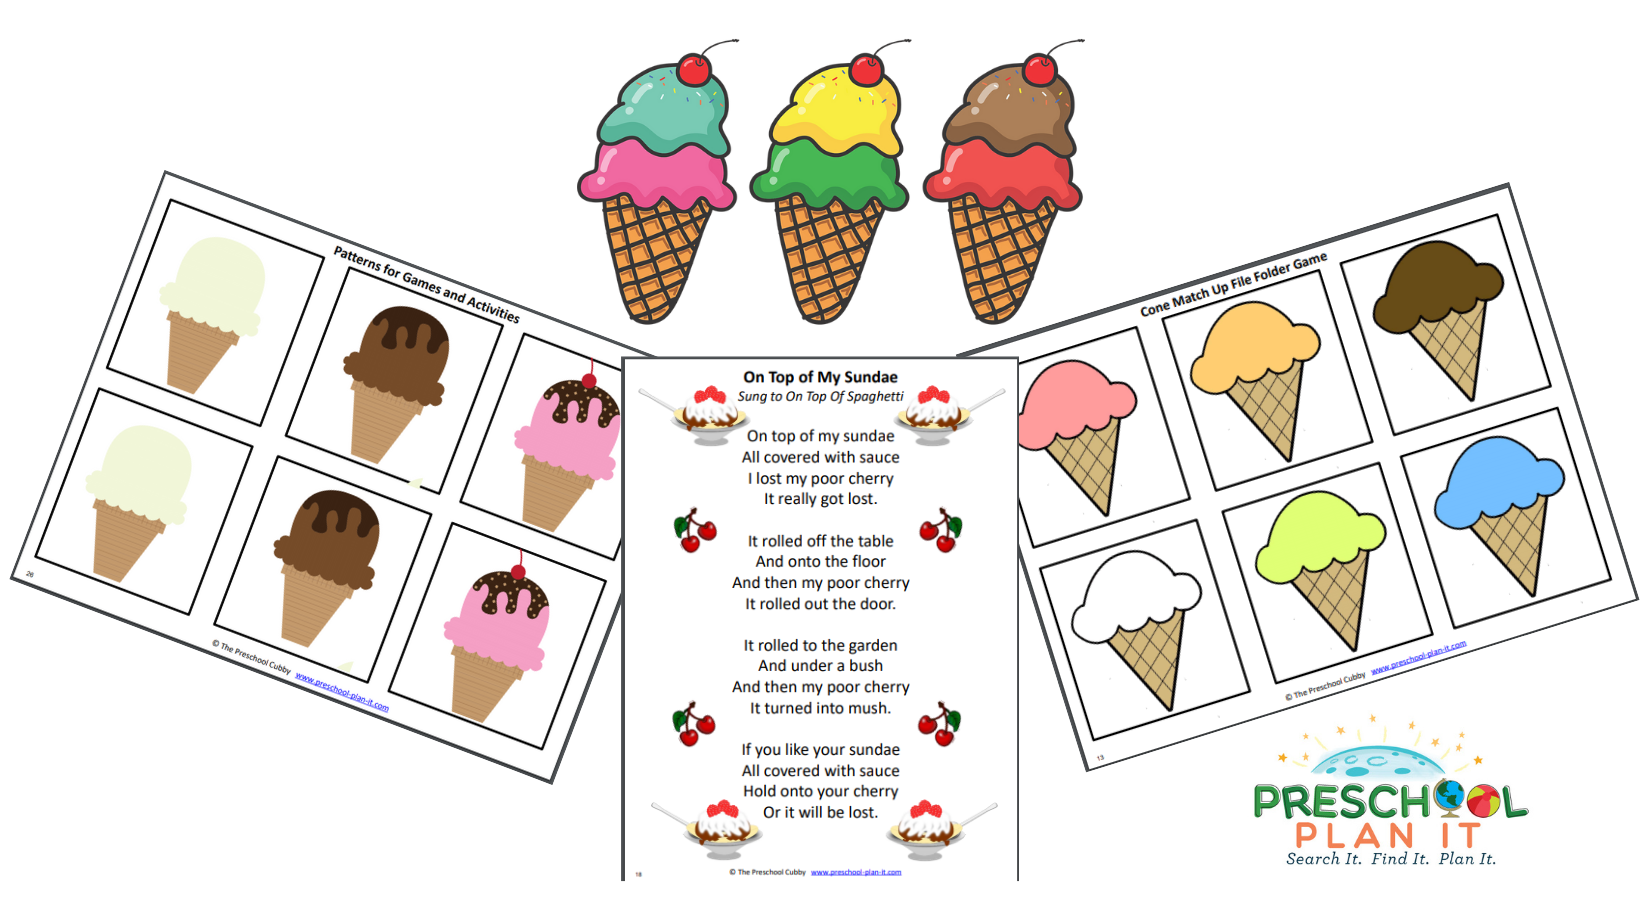 Ice Cream images for Ice Cream Preschool Themed Resource